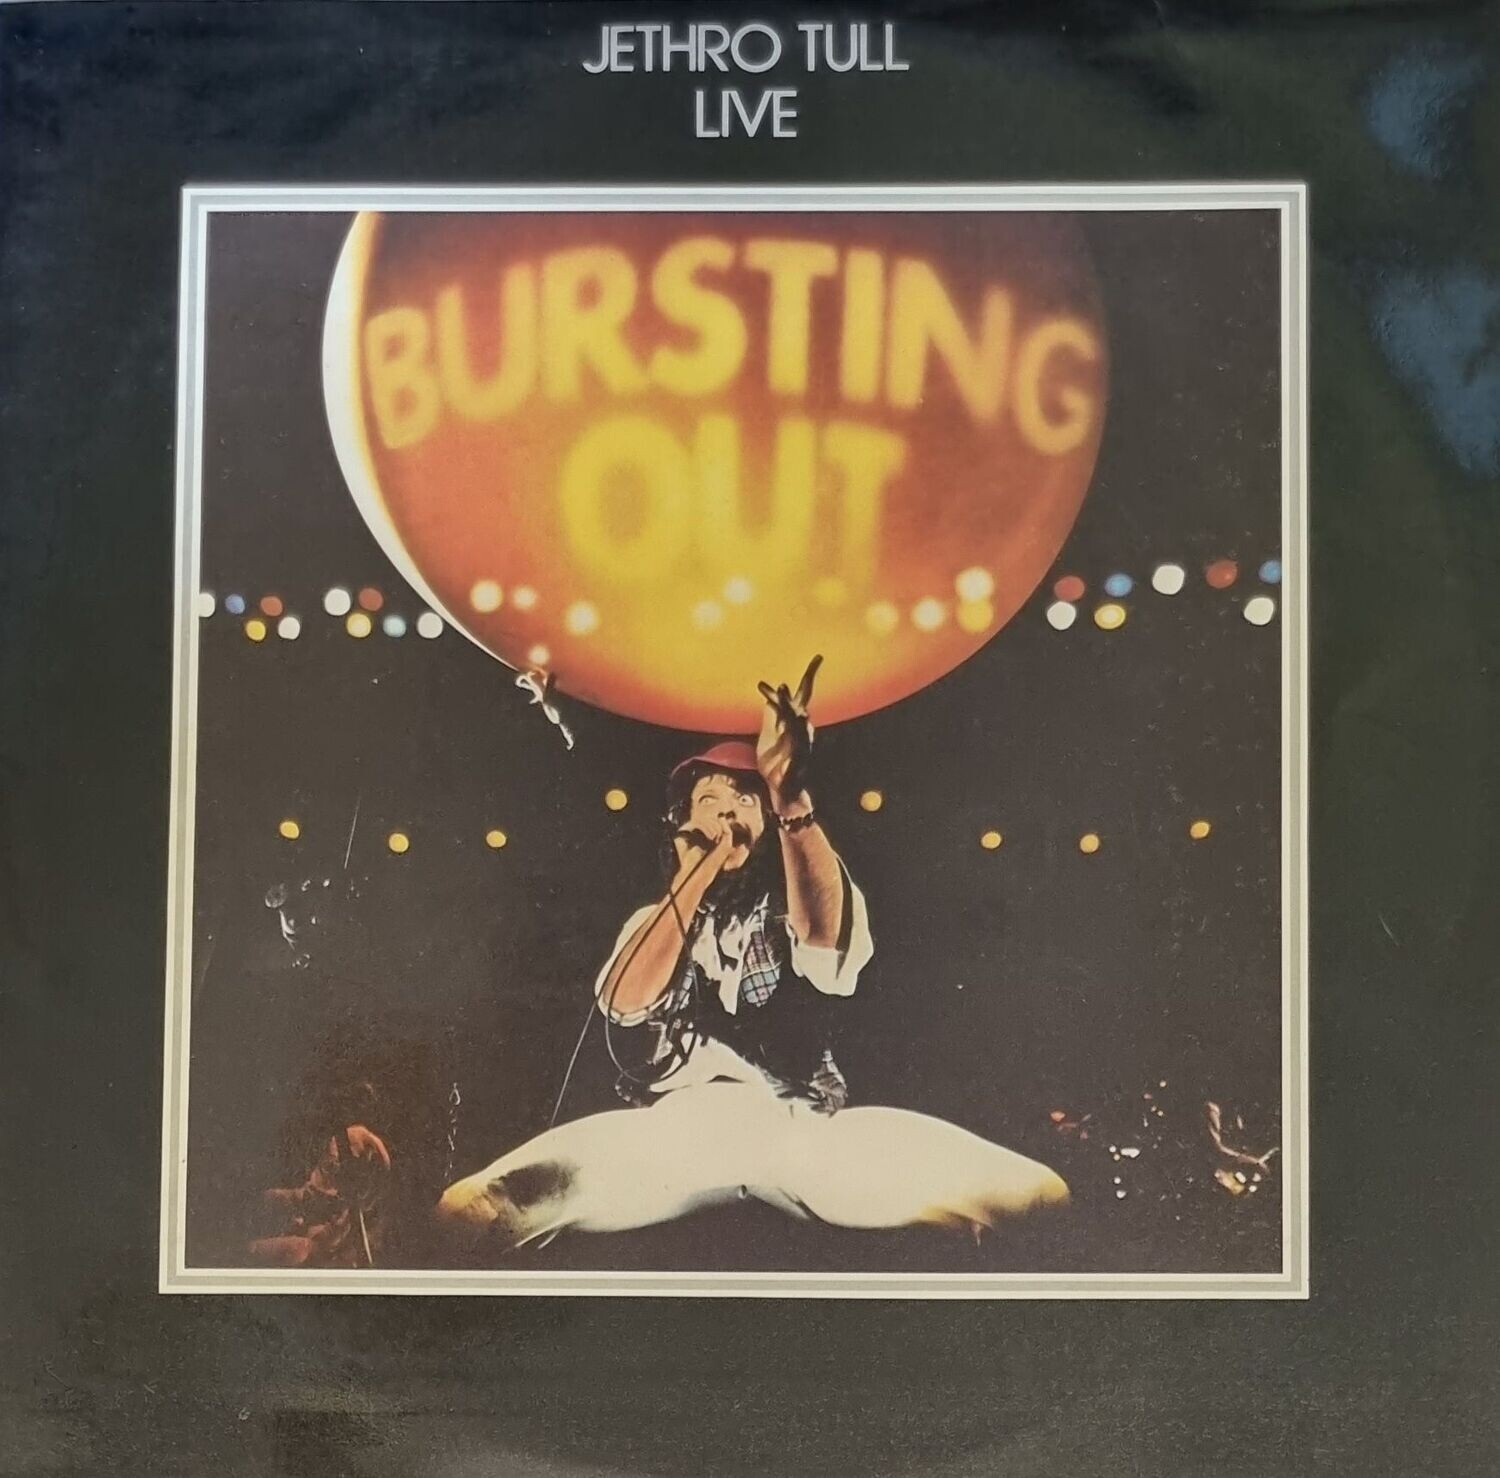 Jethro Tull – Live - Bursting Out (1978) 2 x LP